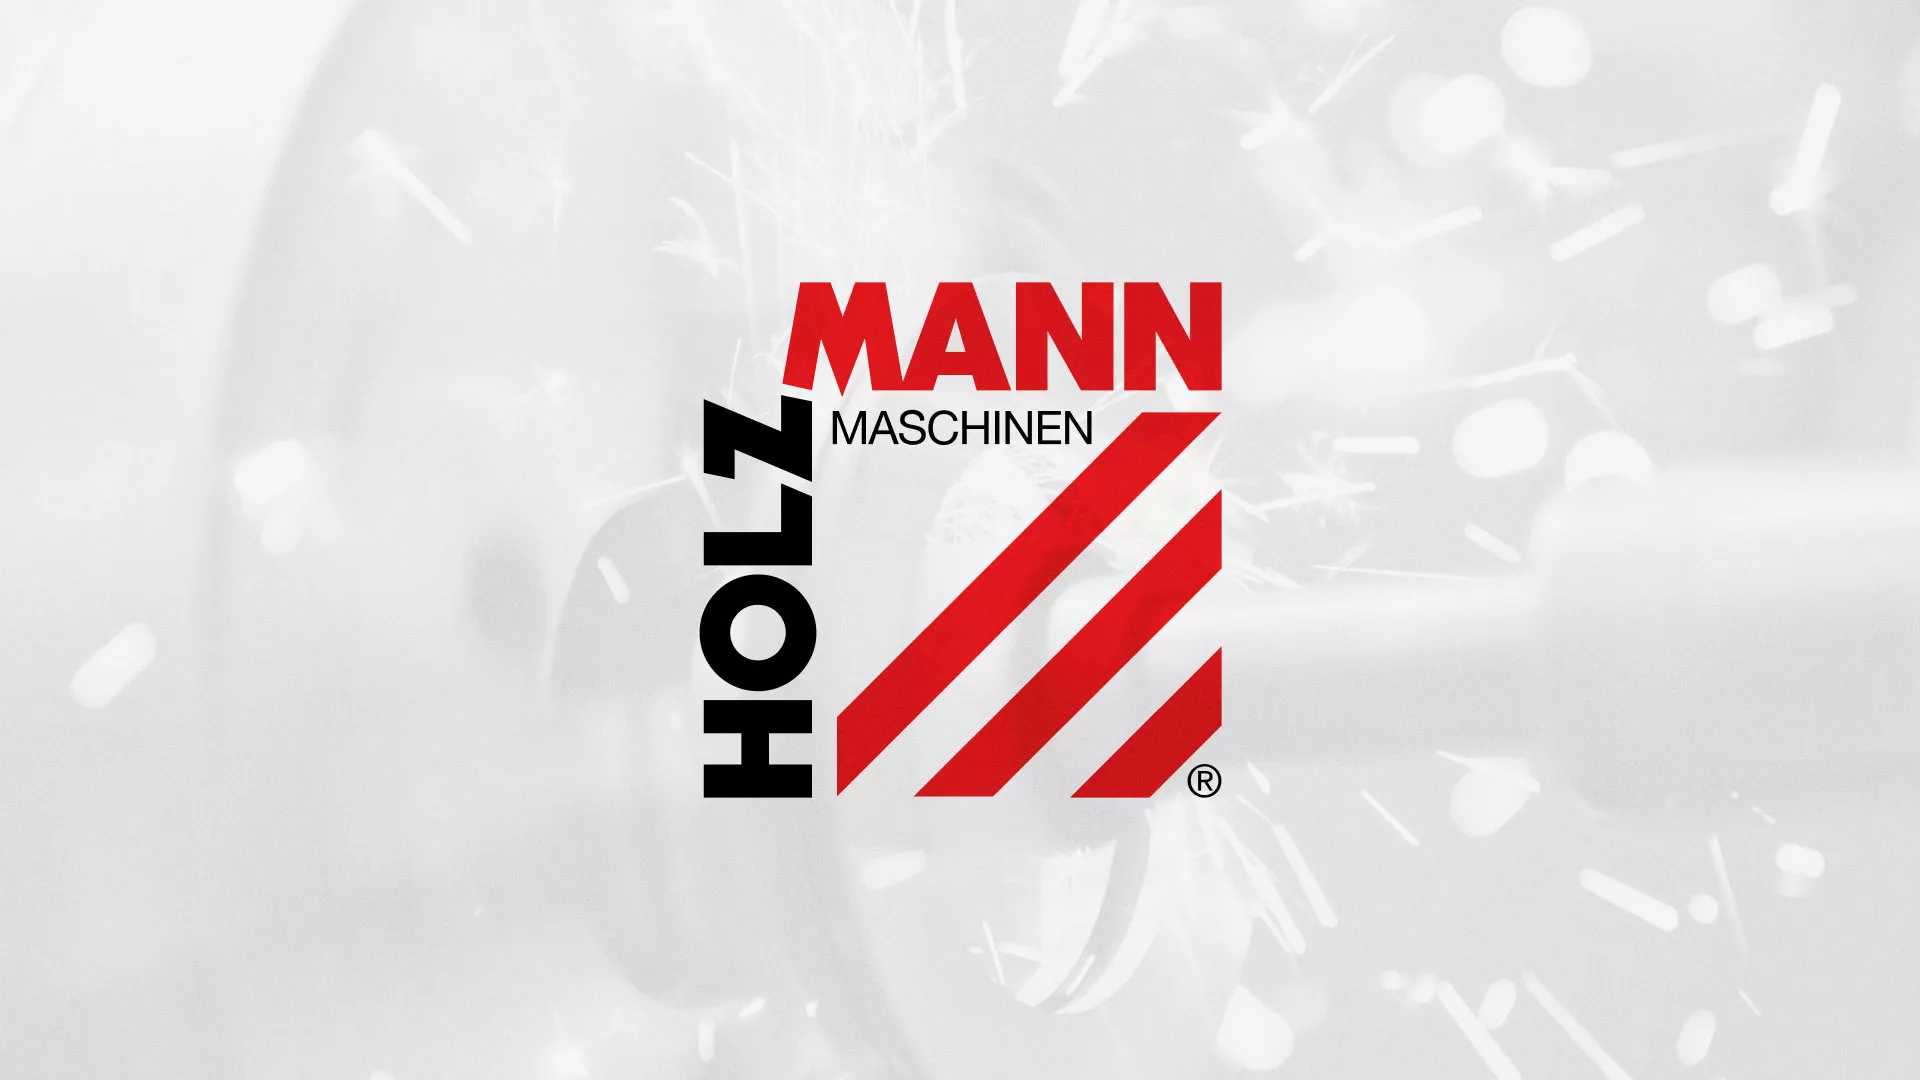 Создание сайта компании «HOLZMANN Maschinen GmbH» в Новошахтинске